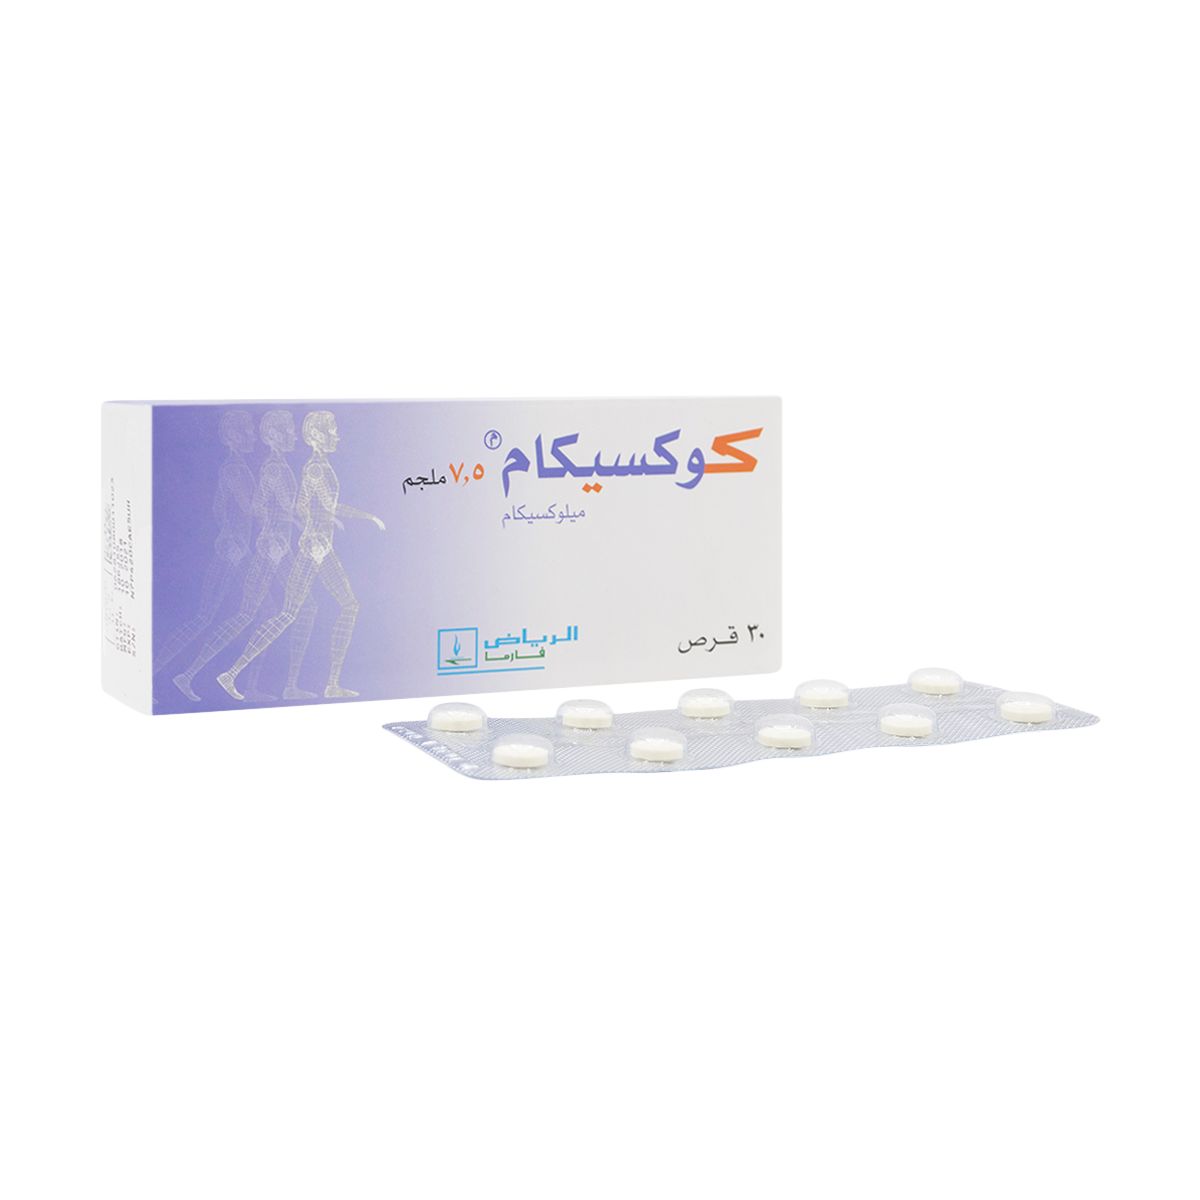 COXICAM Coxicam 7.5 mg 30 Tab